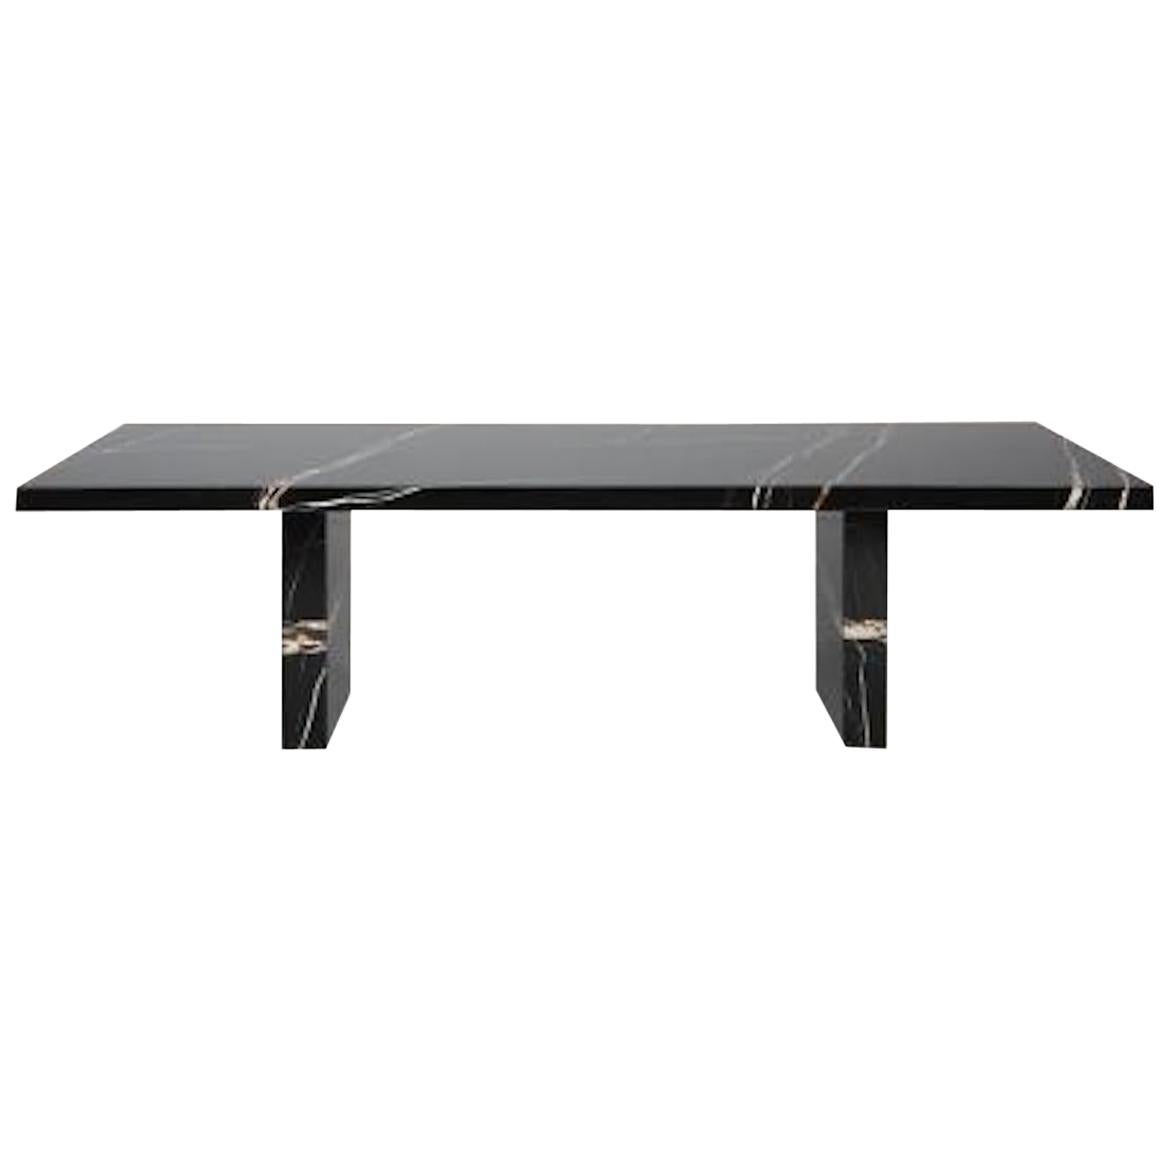 For Sale: Multi (STONE Sahara Noir) DS-788 Customizable Marble, Granite, or Quartz Long Dining Table by De Sede